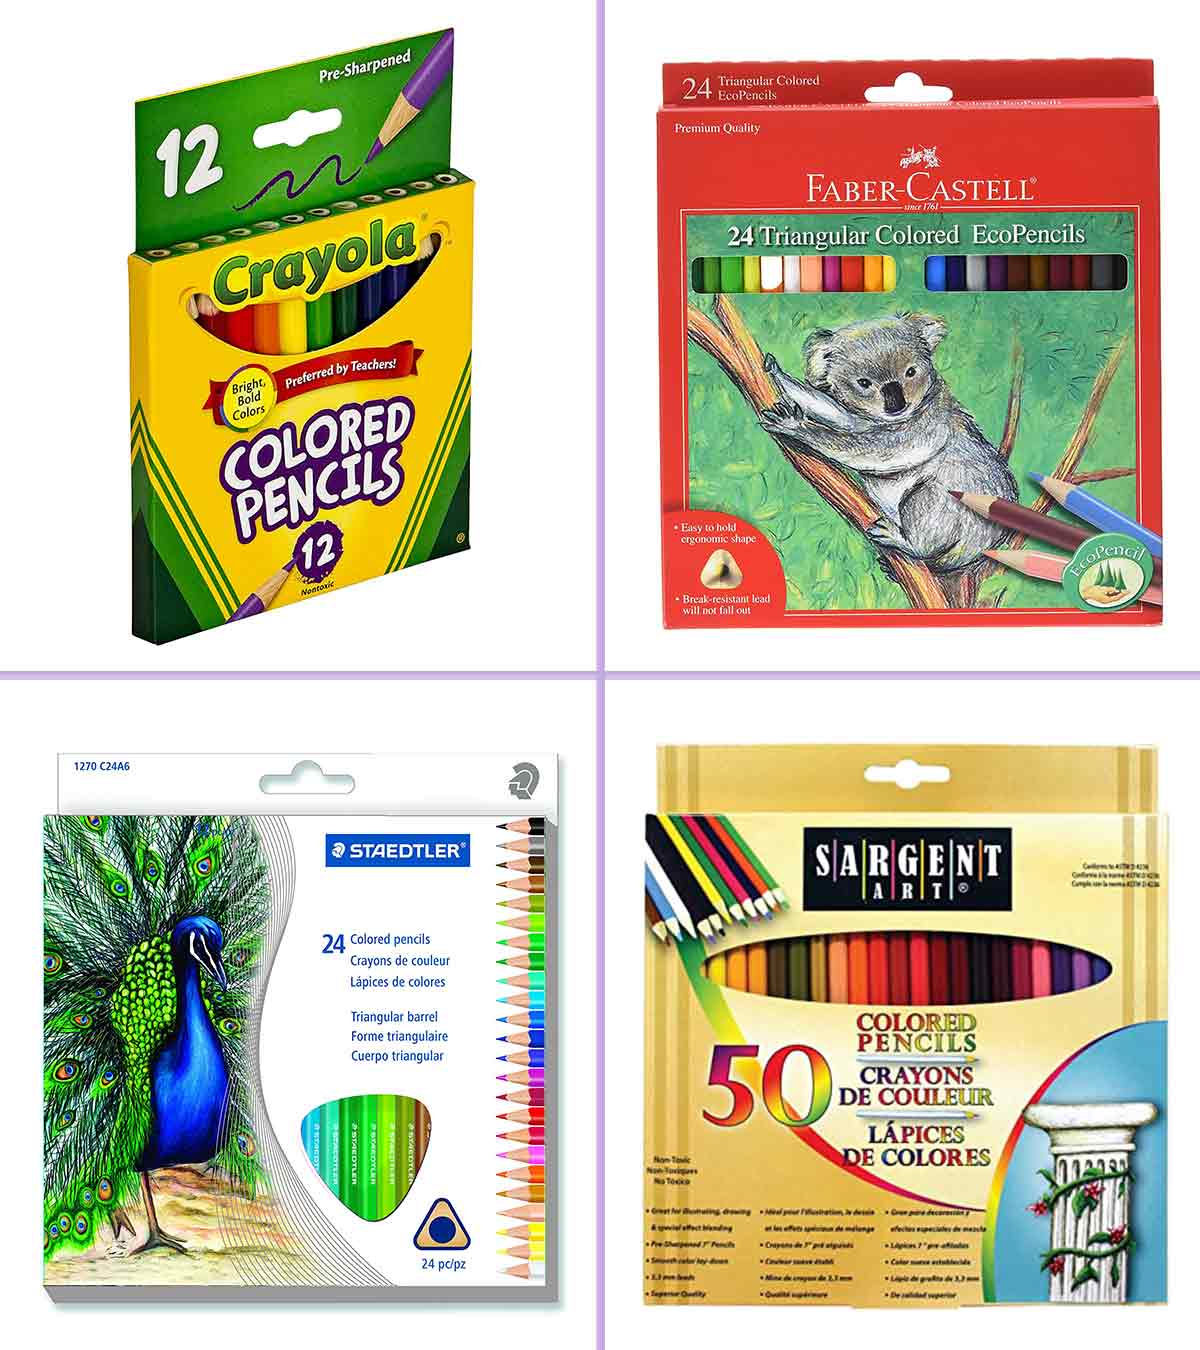 https://www.momjunction.com/wp-content/uploads/2020/05/10-Best-Colored-Pencils-For-Kids-In-2020.jpg